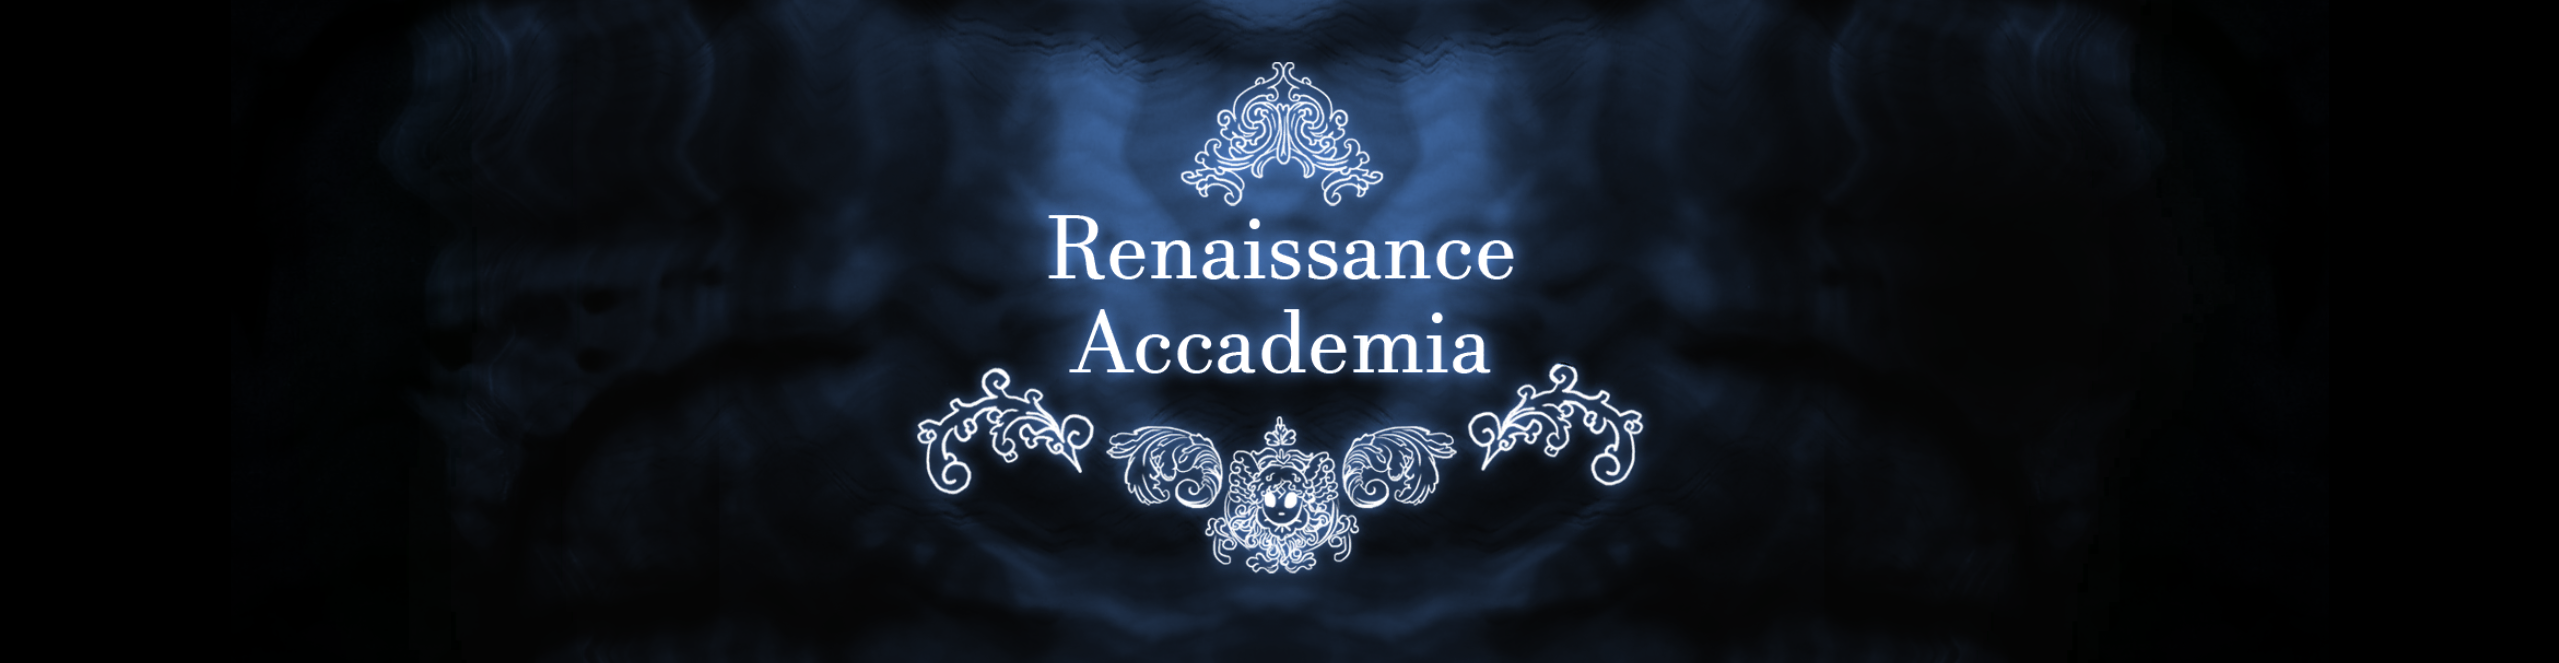 Renaissance Accademia